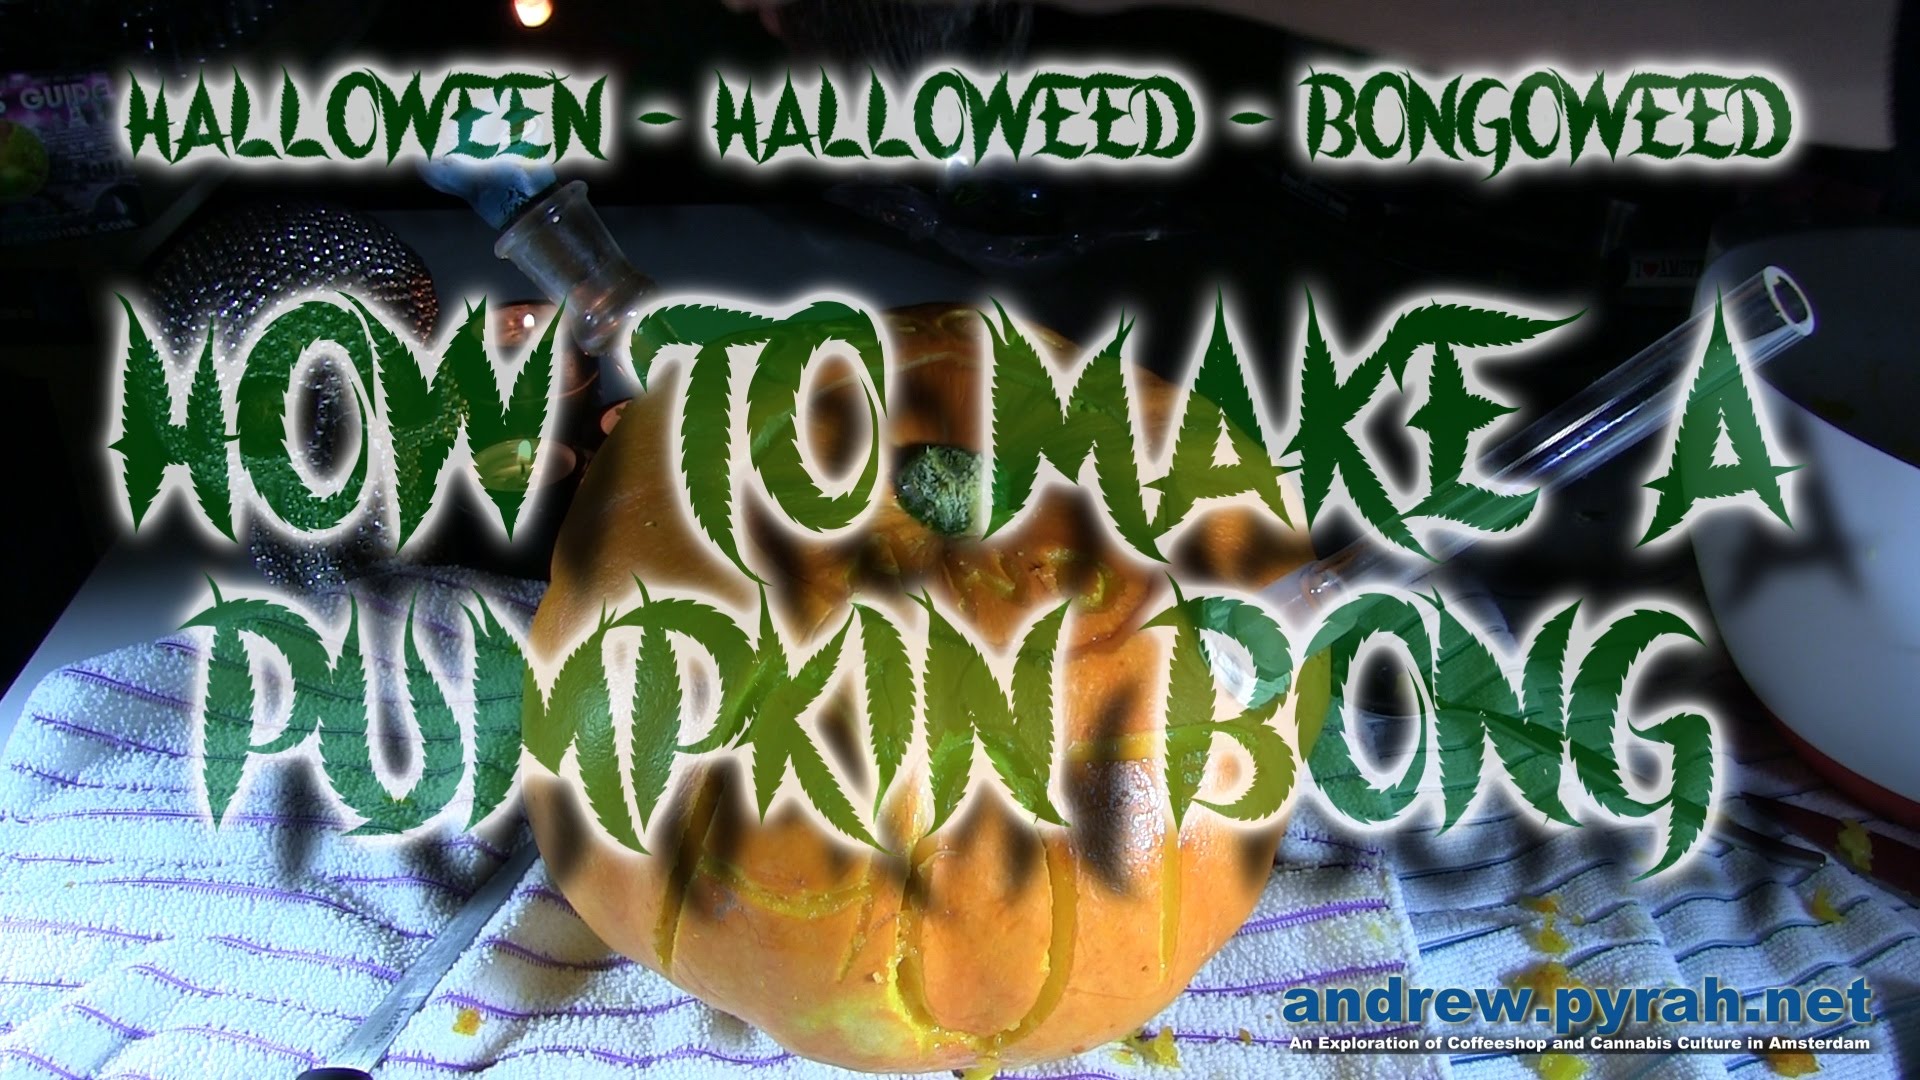 Halloween, Halloweed, Bongoweed – How To Make A Pumpkin Bong (Amsterdam Weed Review 2014)